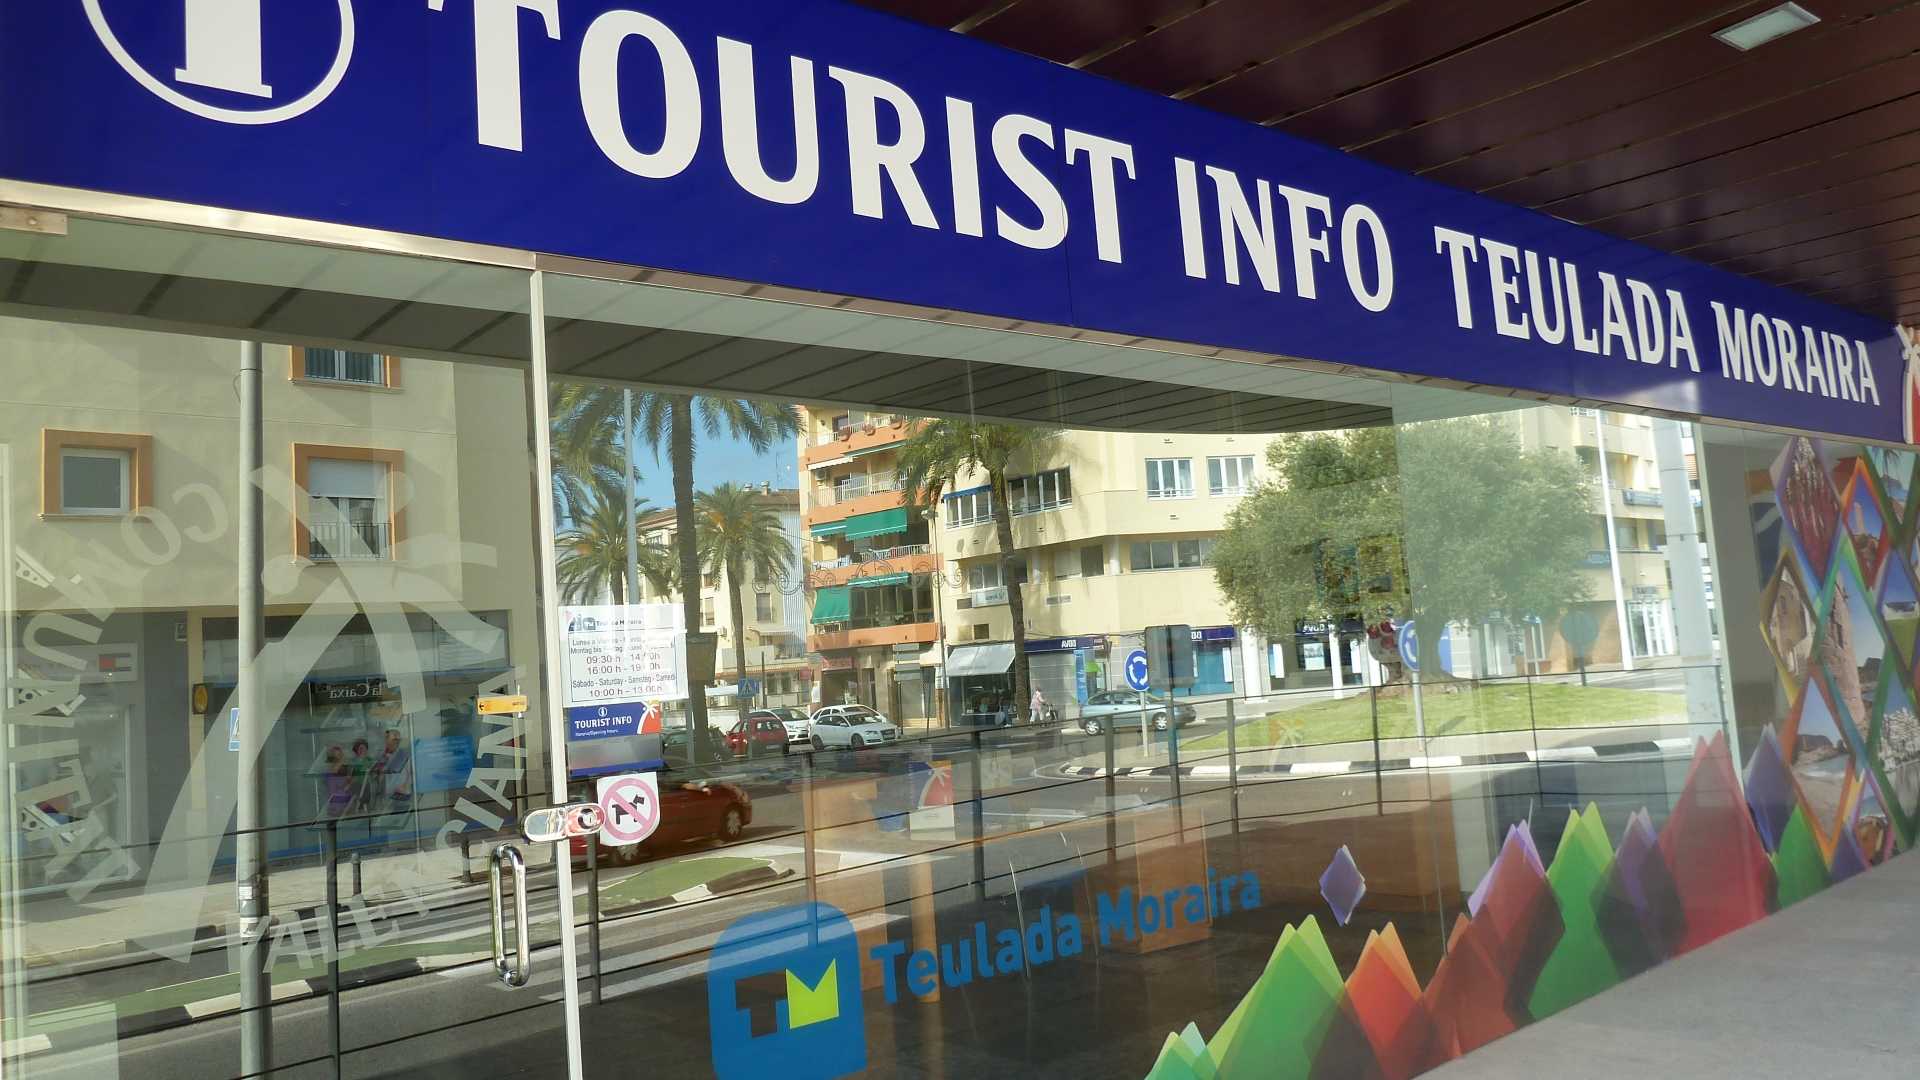 TOURIST INFO TEULADA  MORAIRA